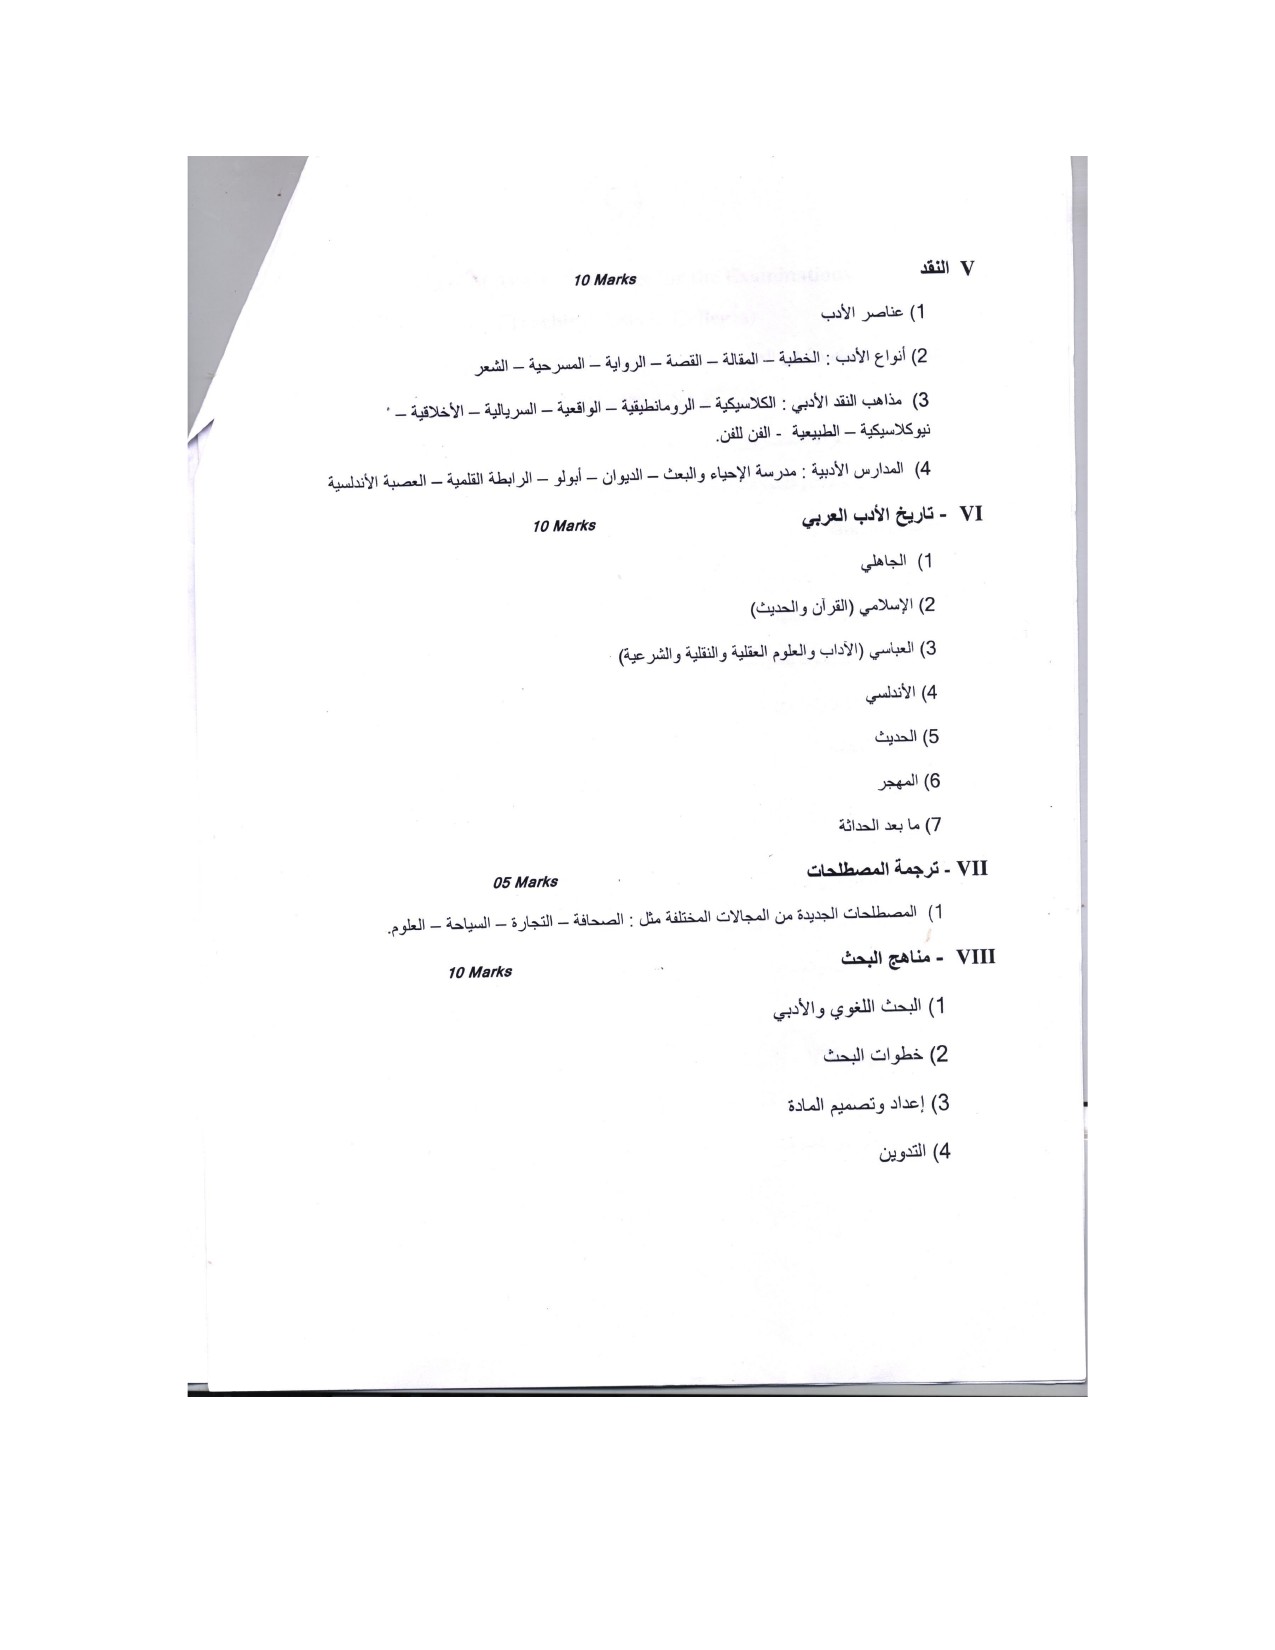 Arabic PG Level Syllabus for Kerala PSC 2021 Exam - Notification Image 3